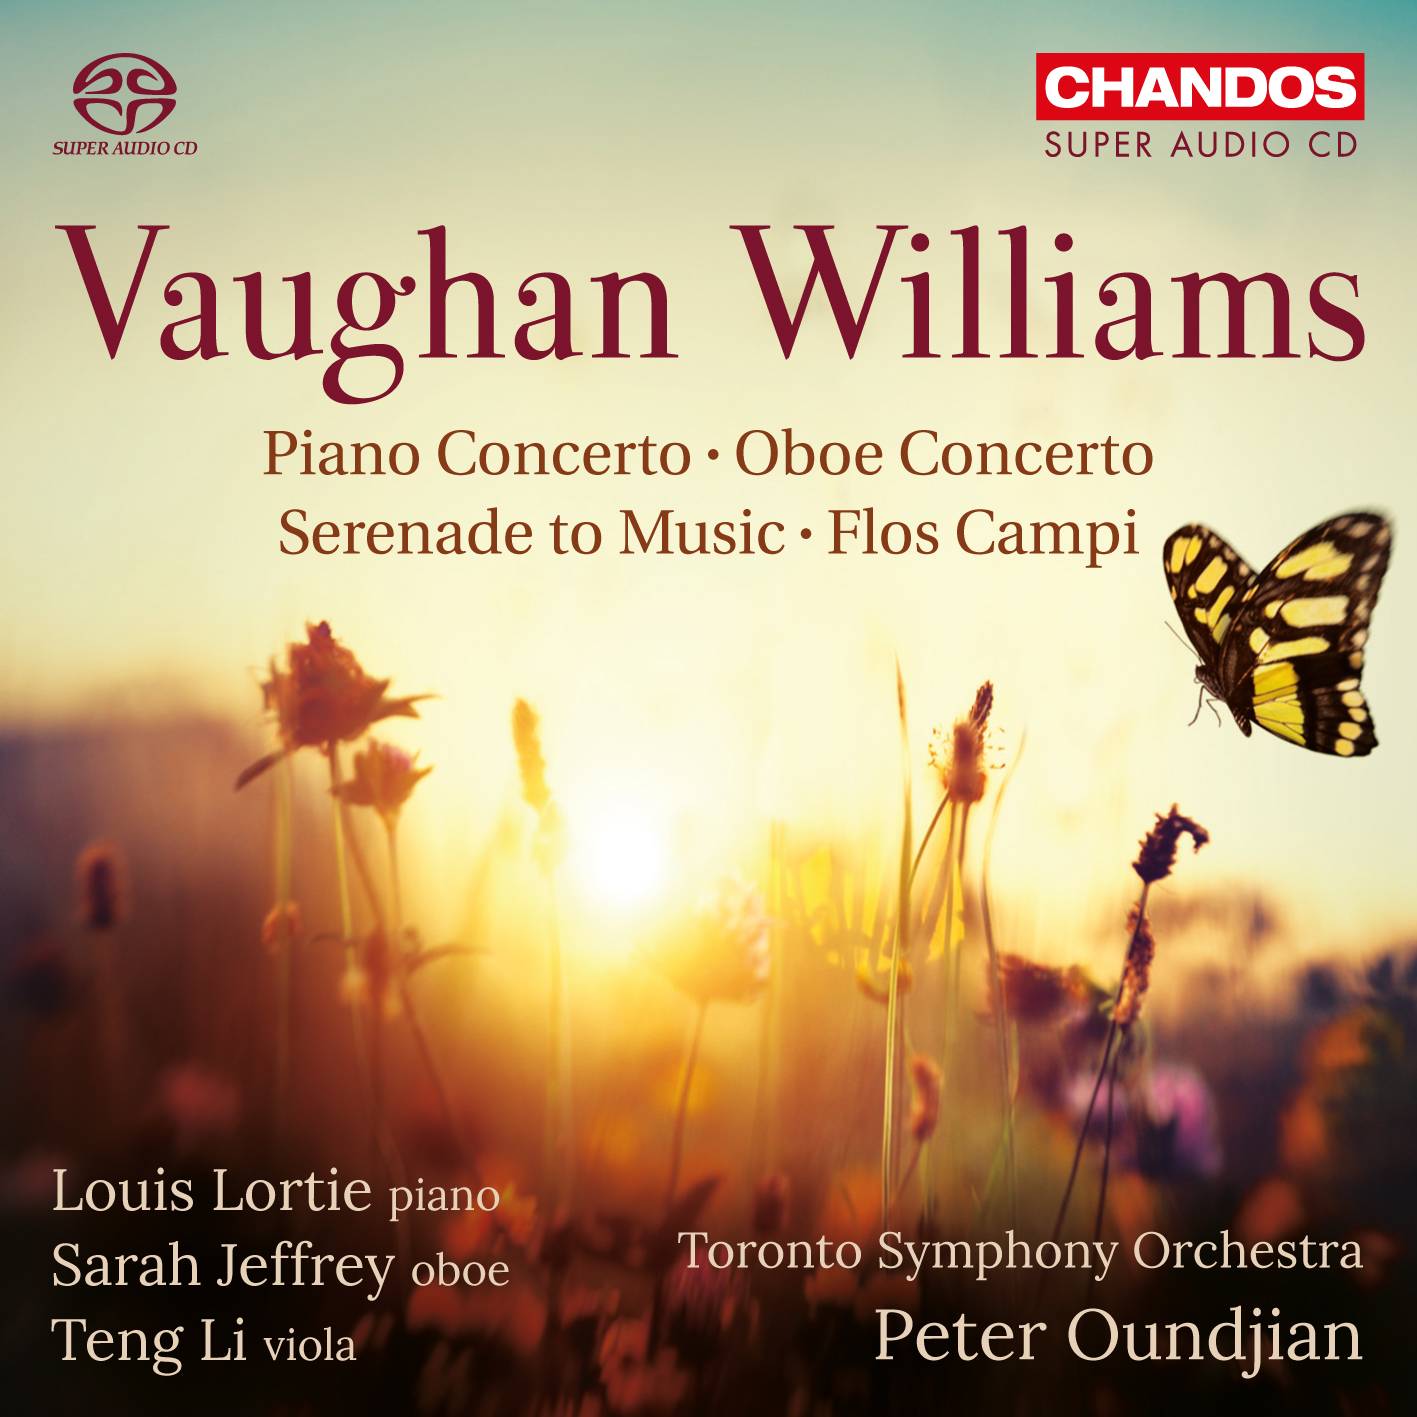 Peter Oundjian, Toronto Symphony Orchestra - Vaughan Williams: Piano Concerto, Oboe Concerto, Serenade to Music & Flos Campi (2018) [FLAC 24bit/96kHz]